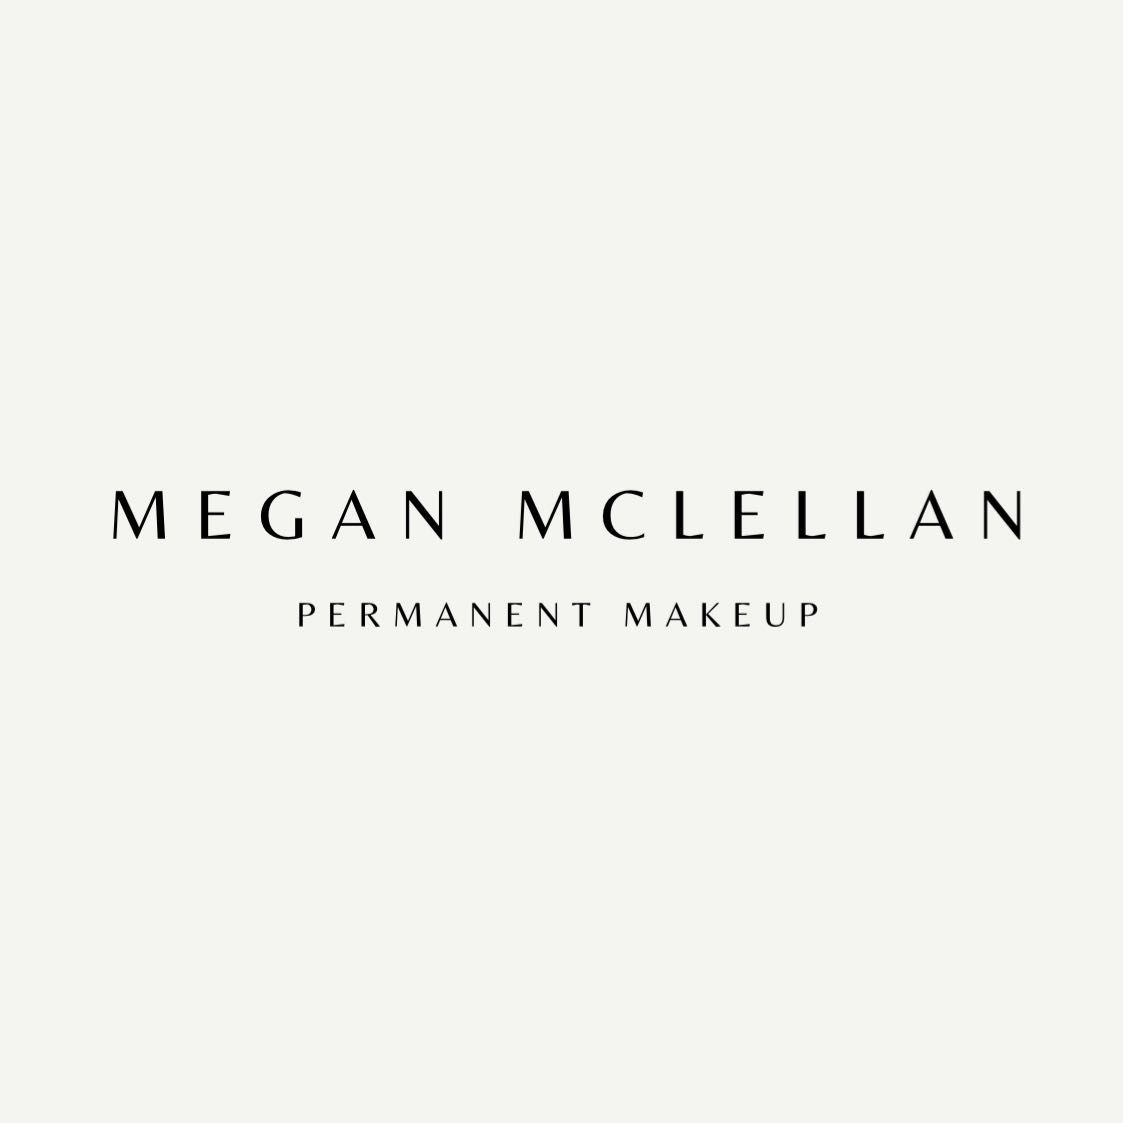 Megan Mclellan Permanent Makeup, 932 Shettleston Road, The Secret Beauty Club, G32 7XW, Glasgow